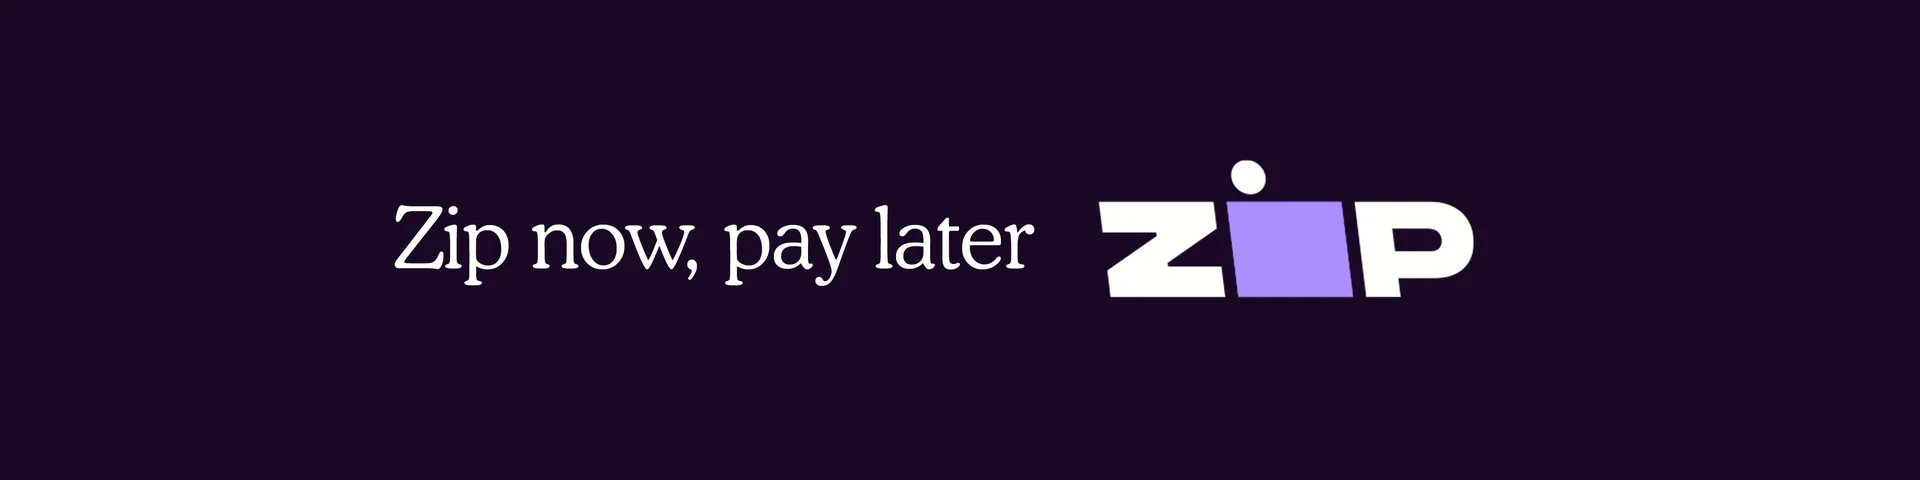 Introducing ZipPay and ZipMoney